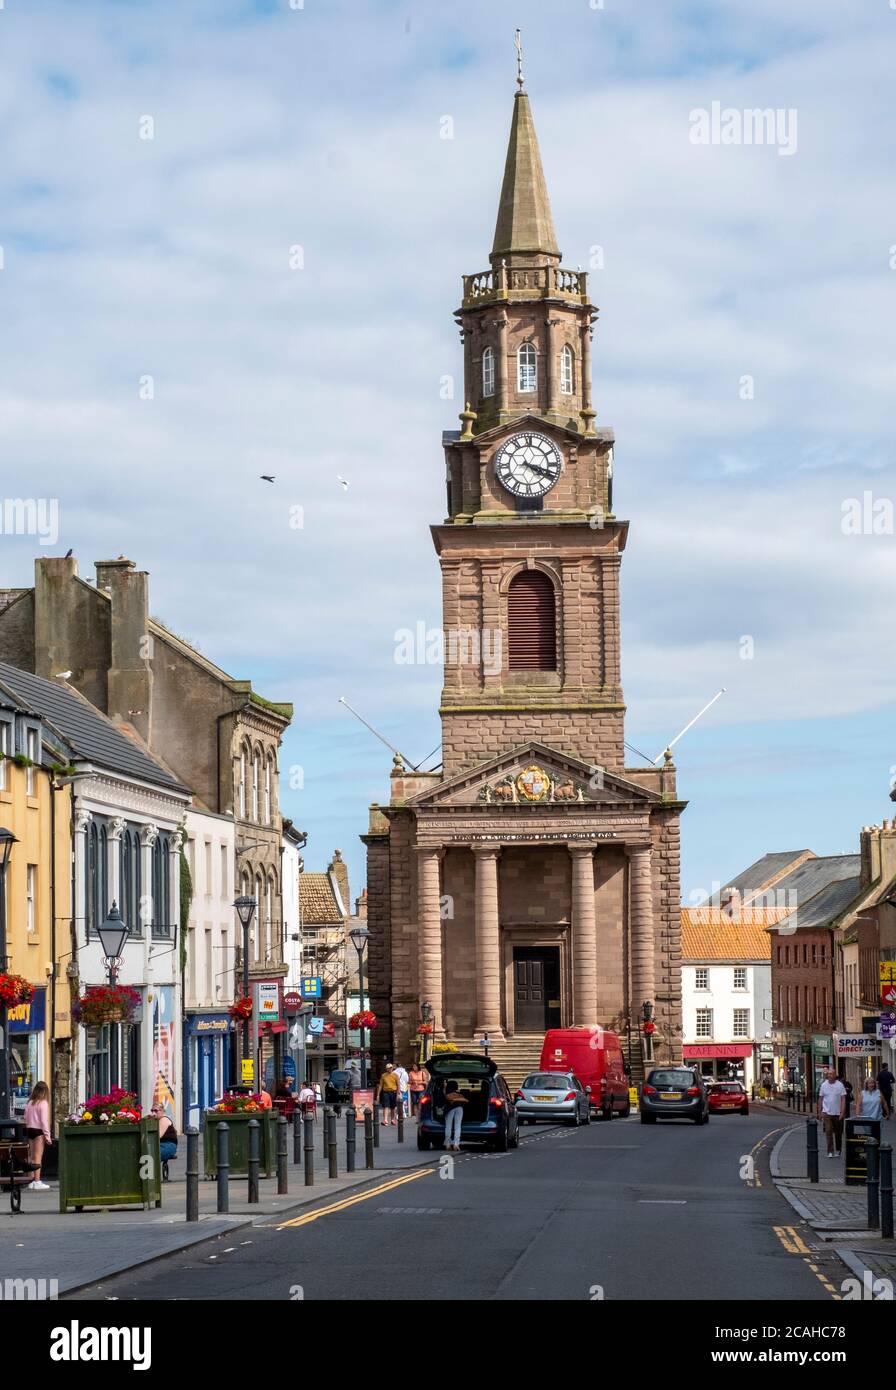 The town hall, Marygate, Berwick-upon-Tweed, Northumberland, England. Stock Photo